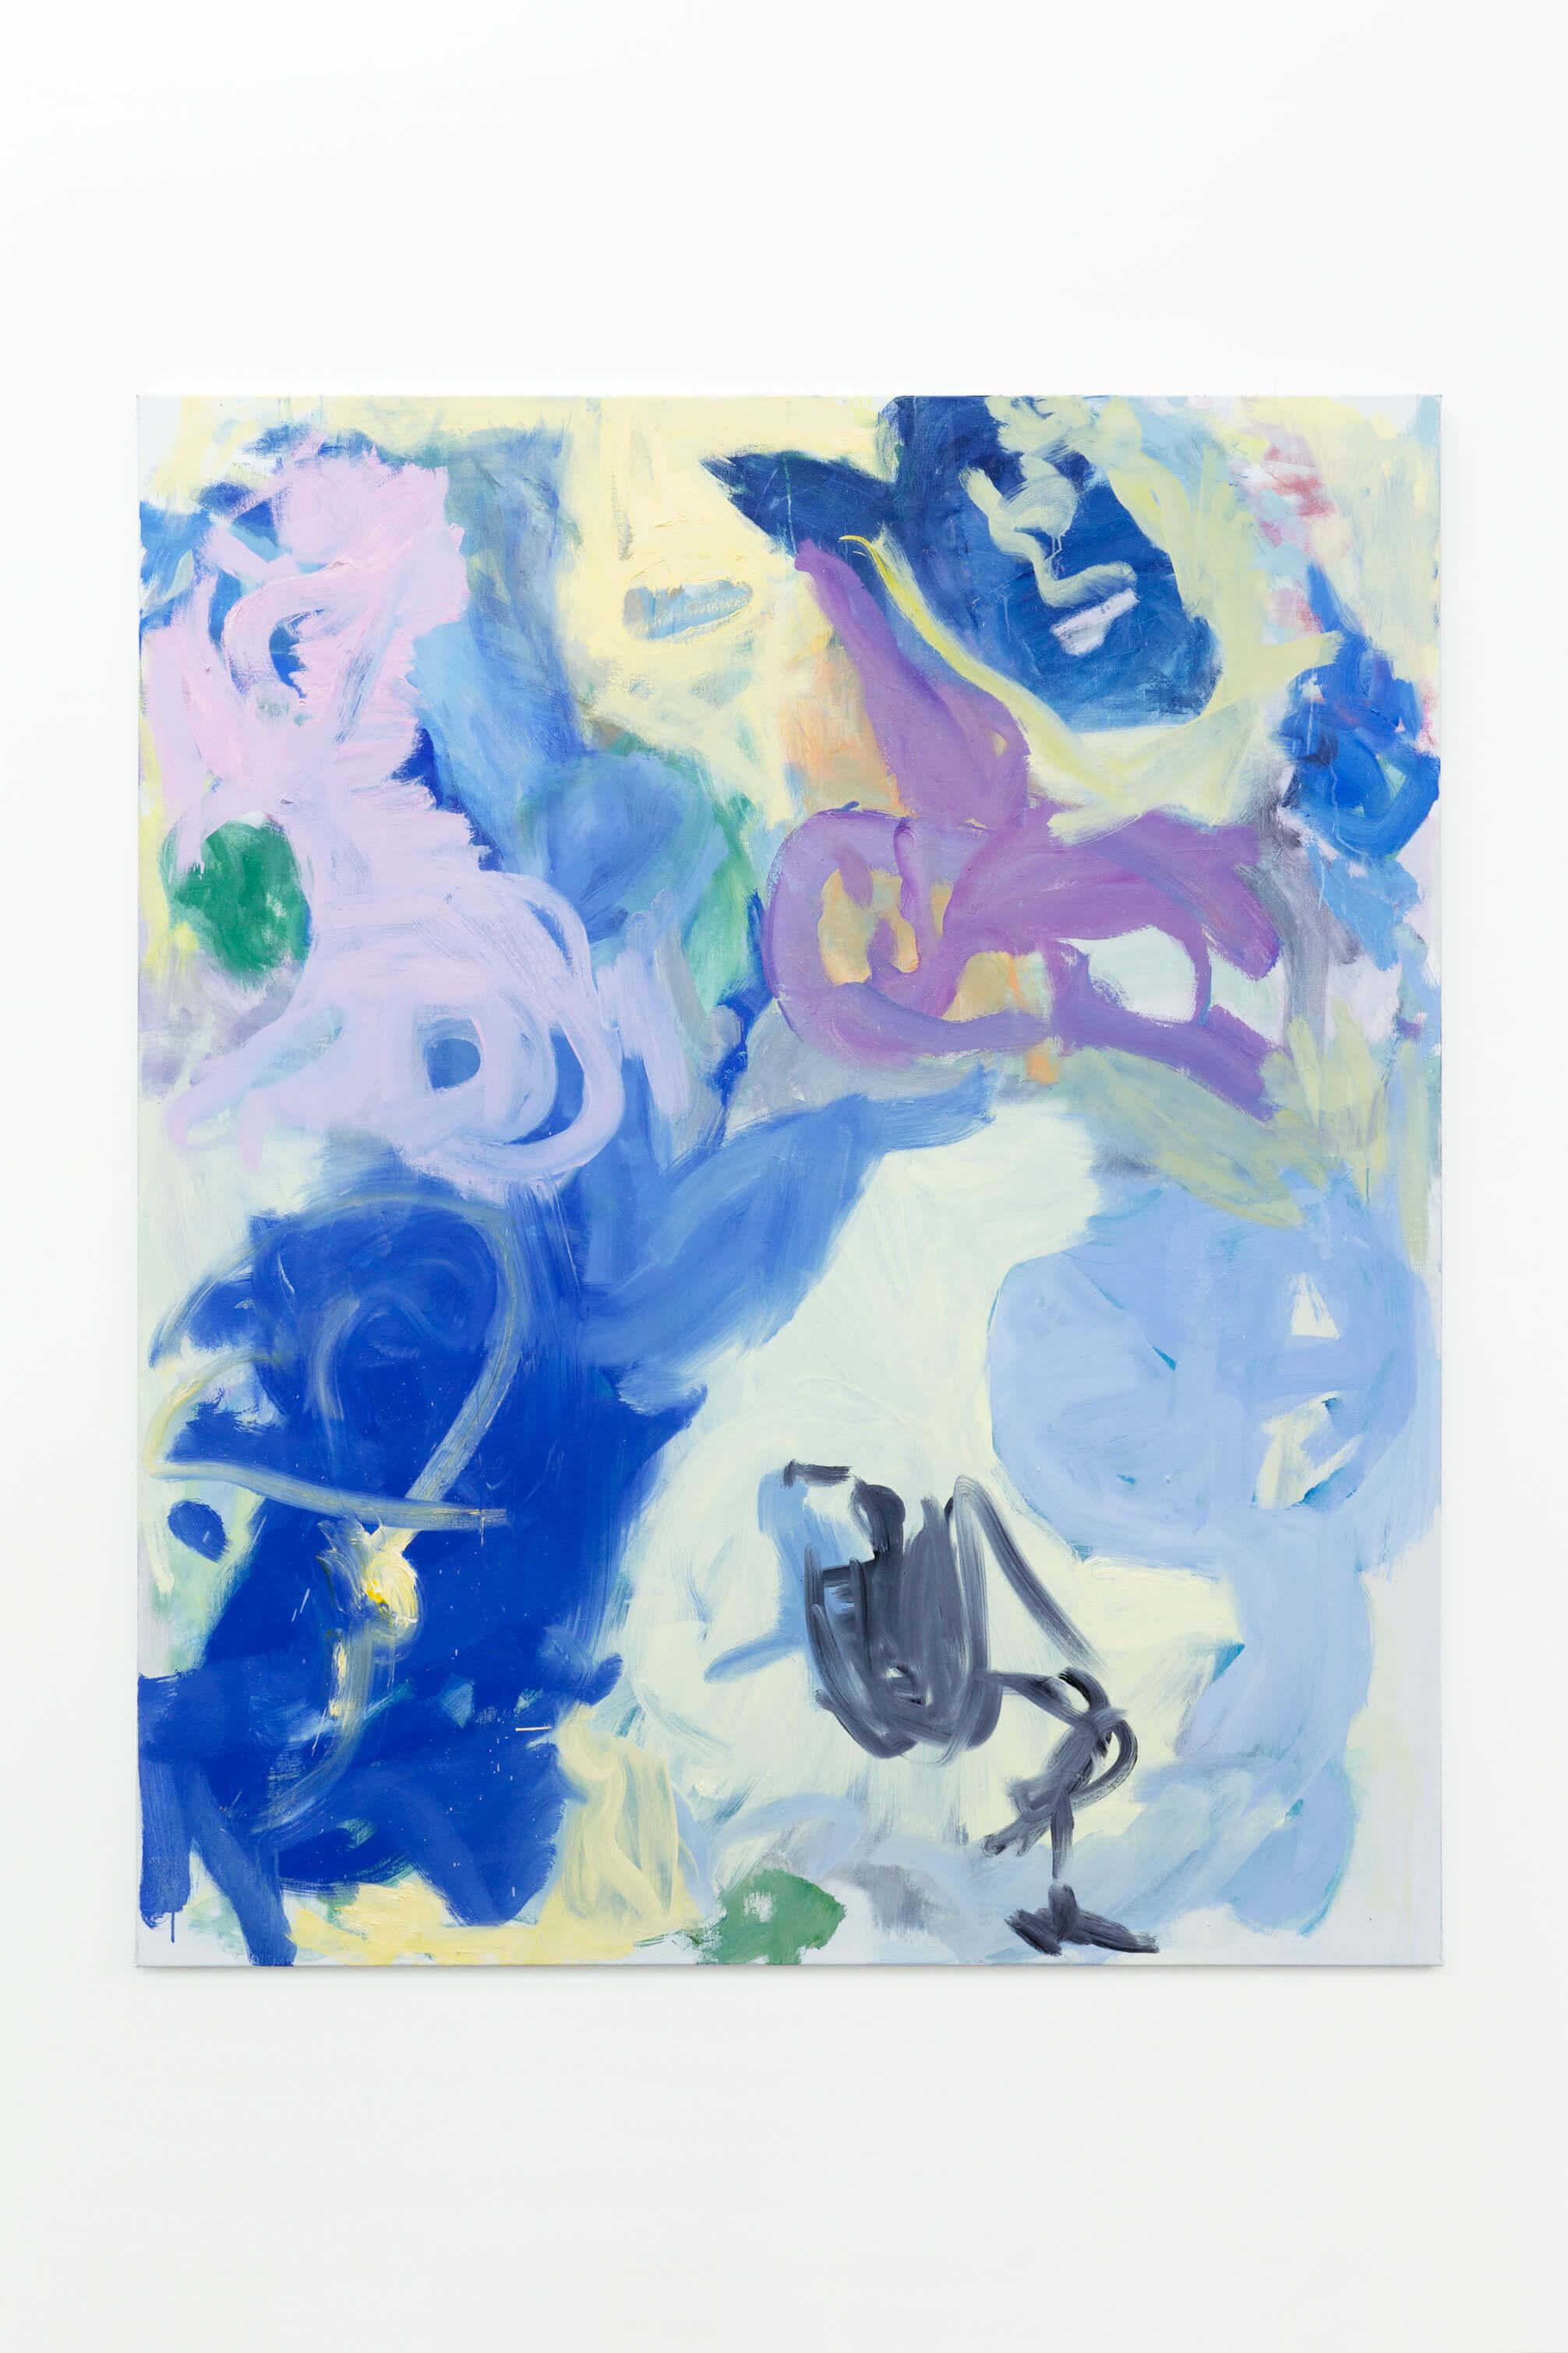 Joanne Robertson, Press Onto, 2021; Oil on canvasâ€¨, 180 Ã— 150 cm â€¨/ Courtesy the artist, Edouard Montassut, and Drei, Cologne